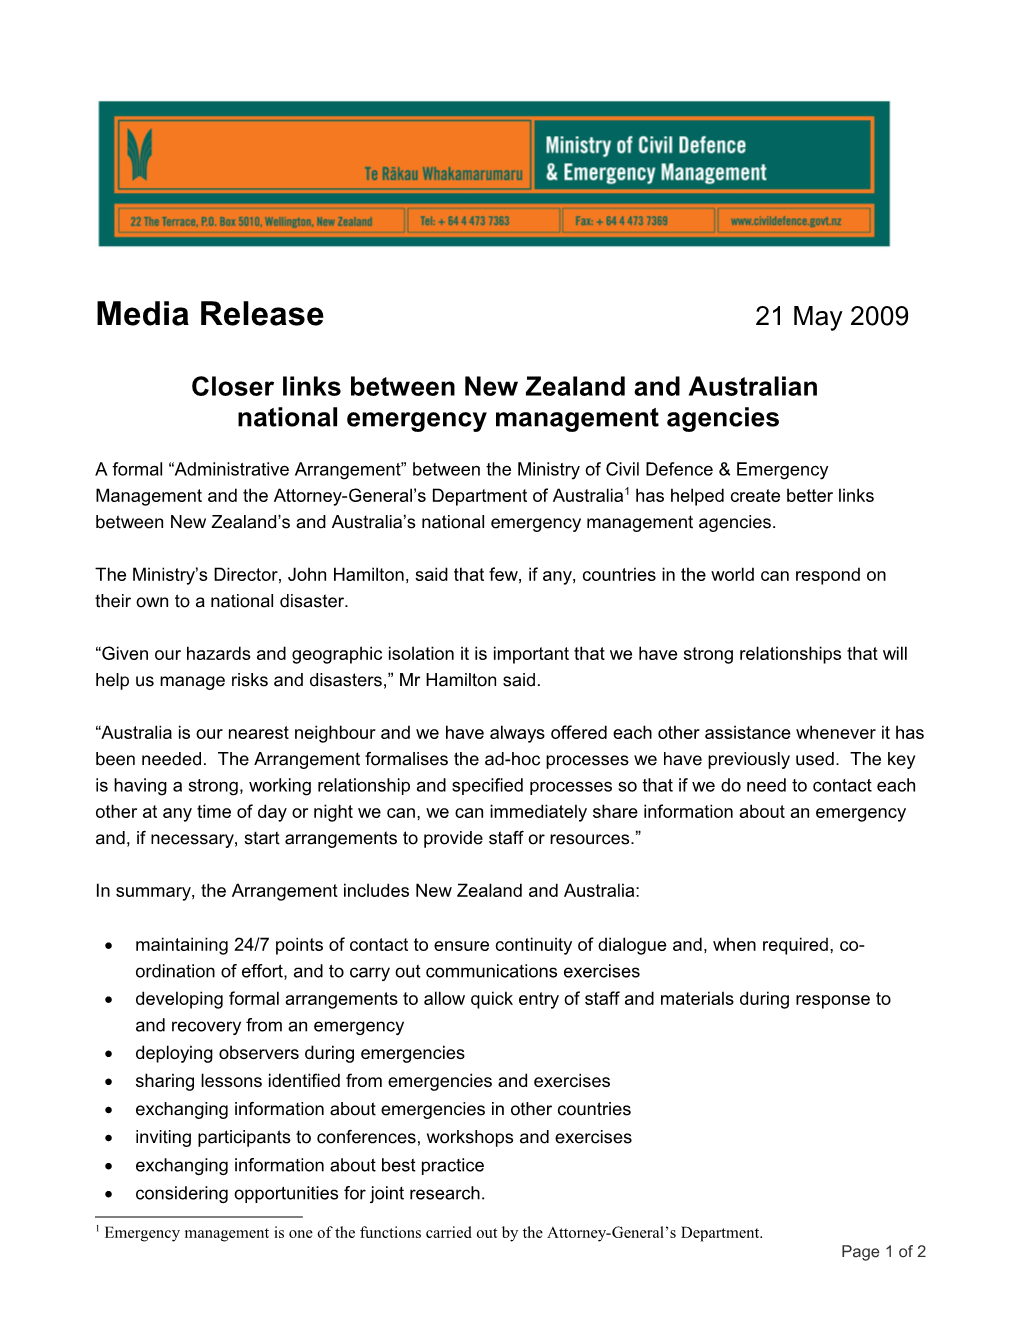 Closer Links Between New Zealand and Australian National Emergency Management Agencies